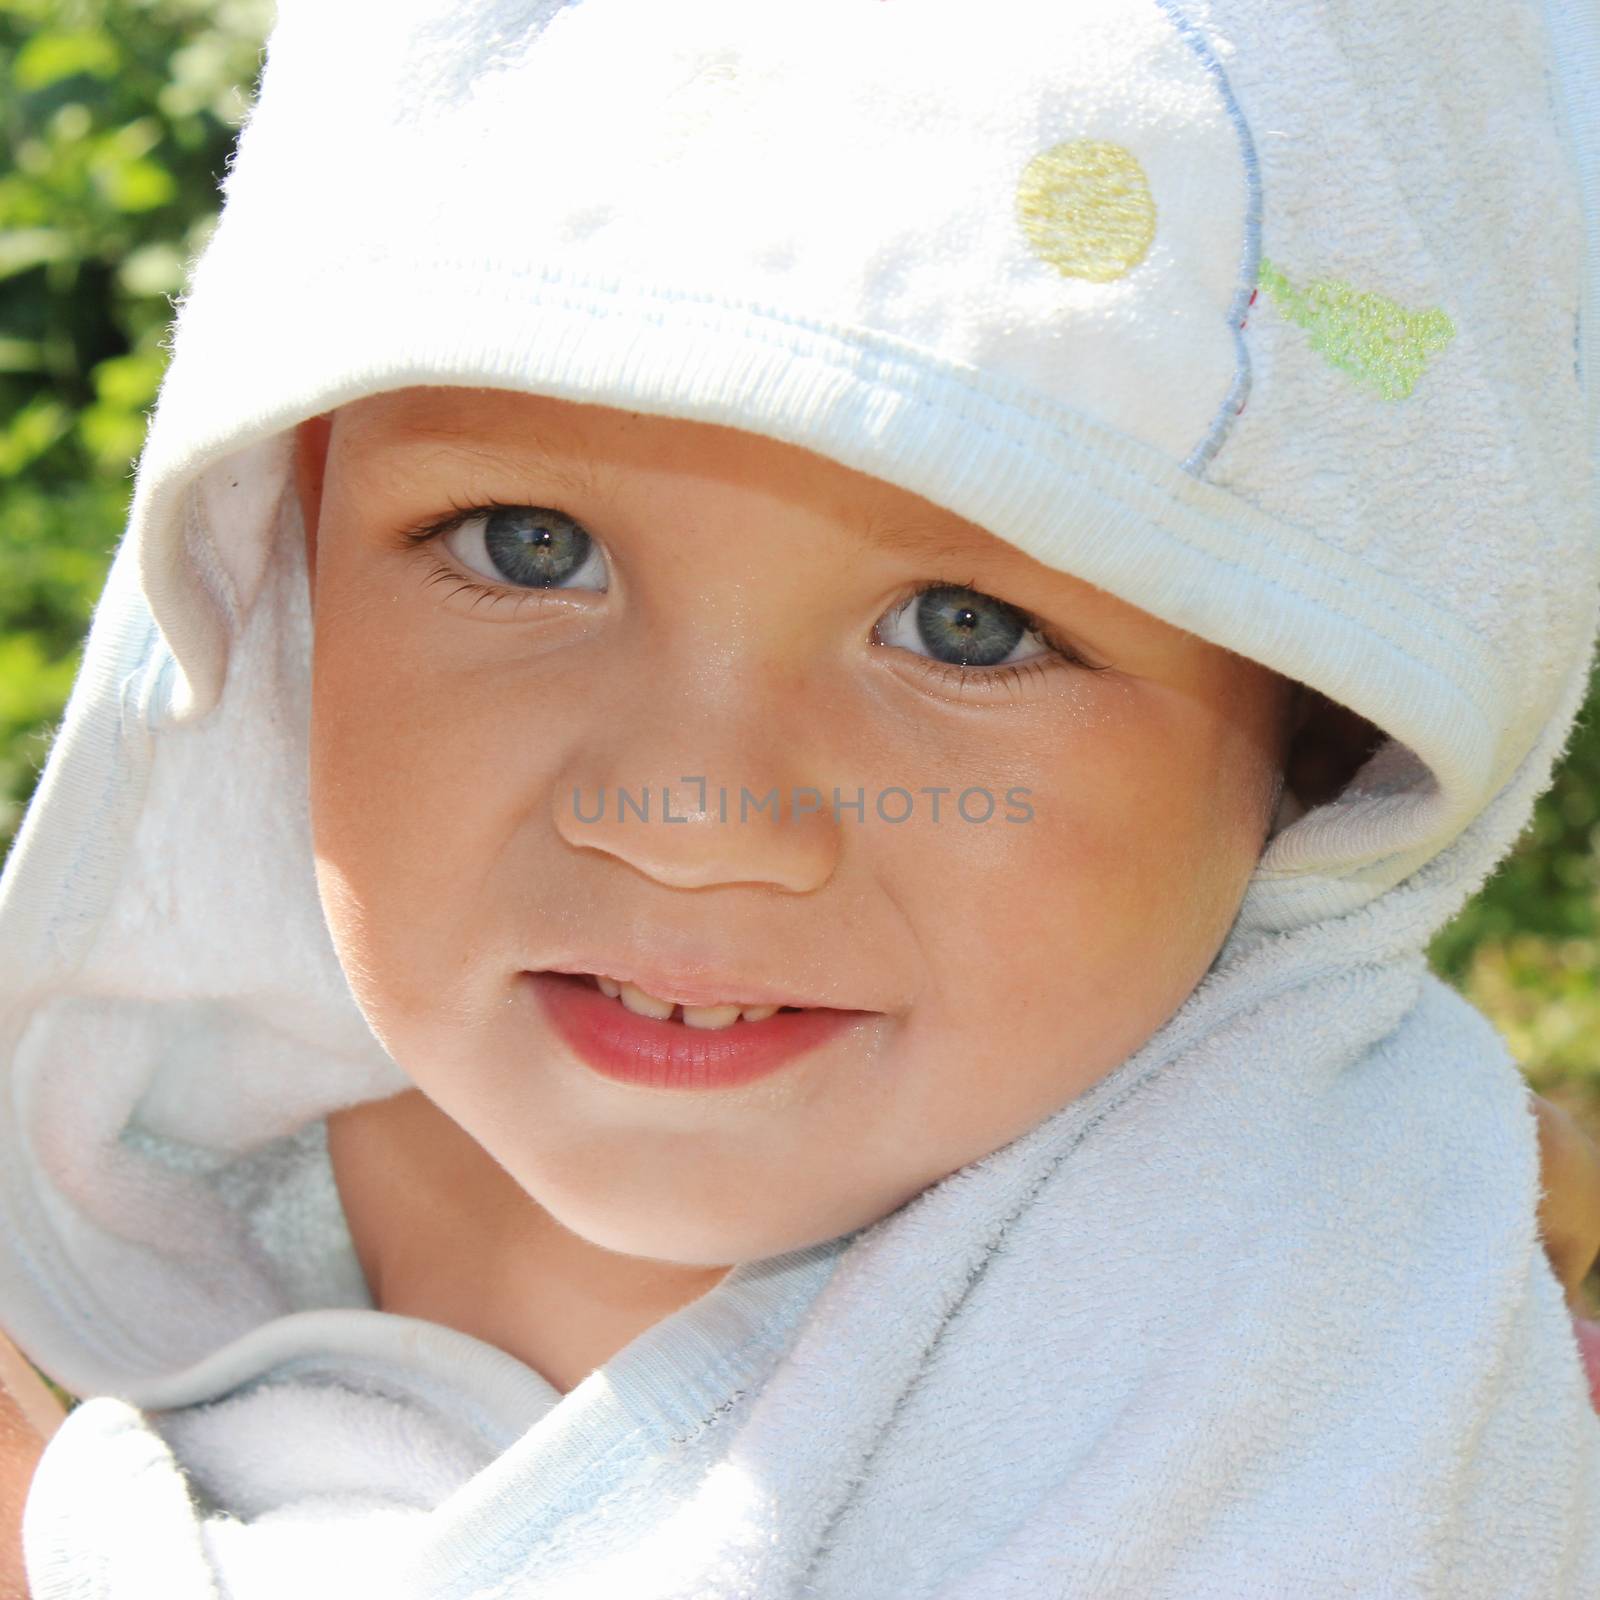 Closeup portrait of cute smiling baby boy in blue towel